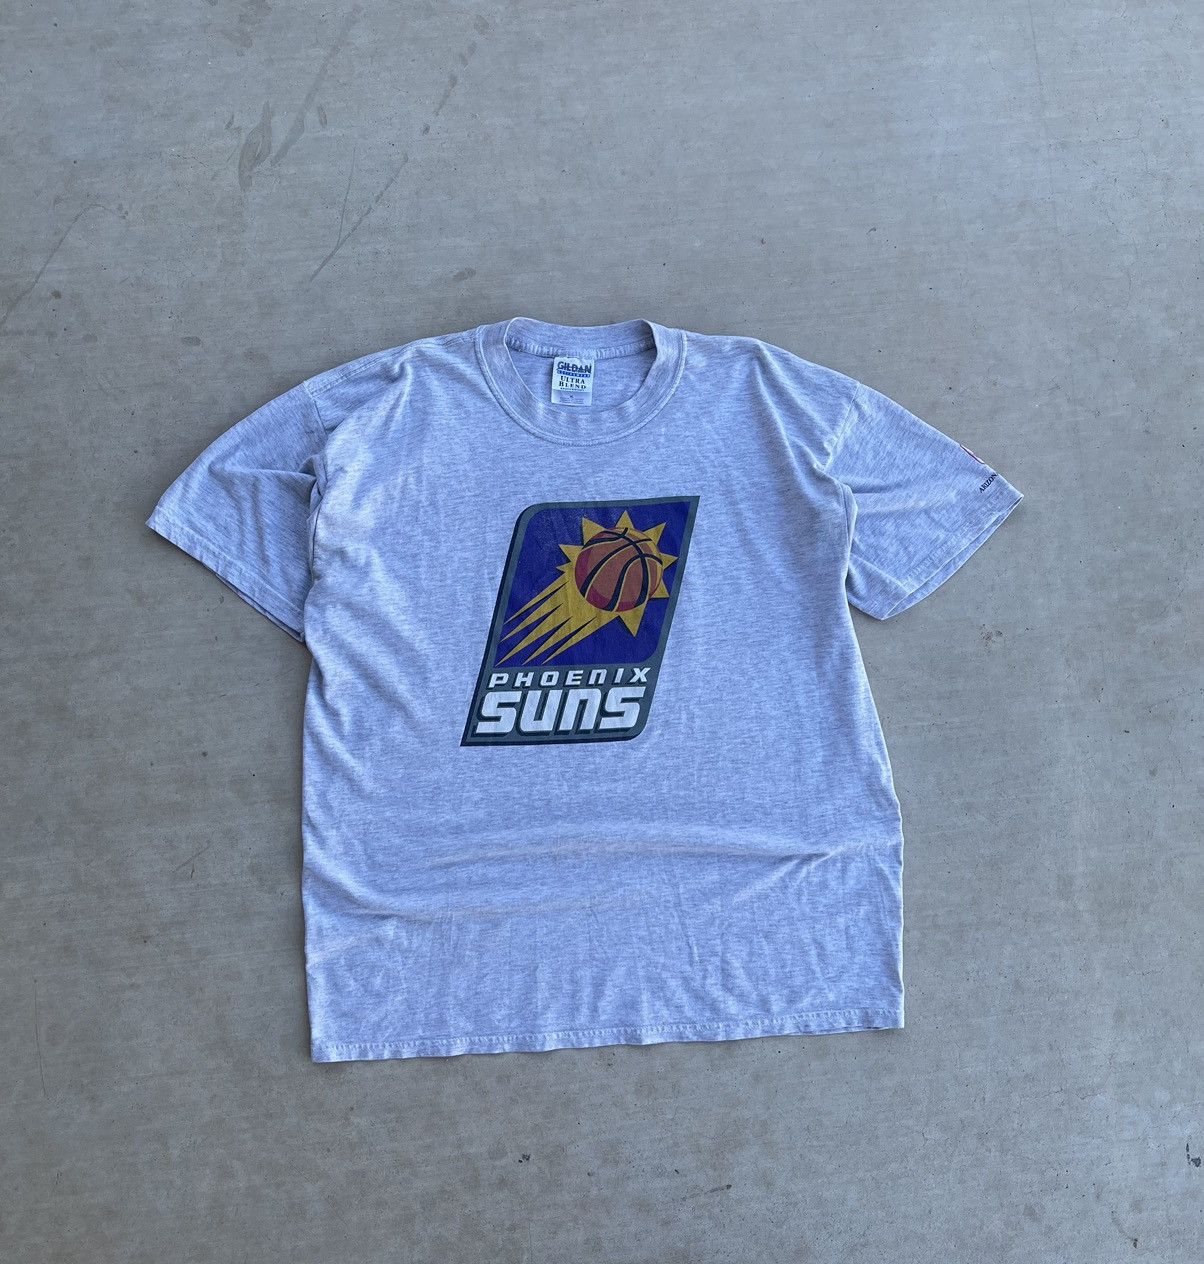 Nike Vintage Early 2000’s Phoenix Suns Basketball T Shirt Size XL Size US XL / EU 56 / 4 - 2 Preview